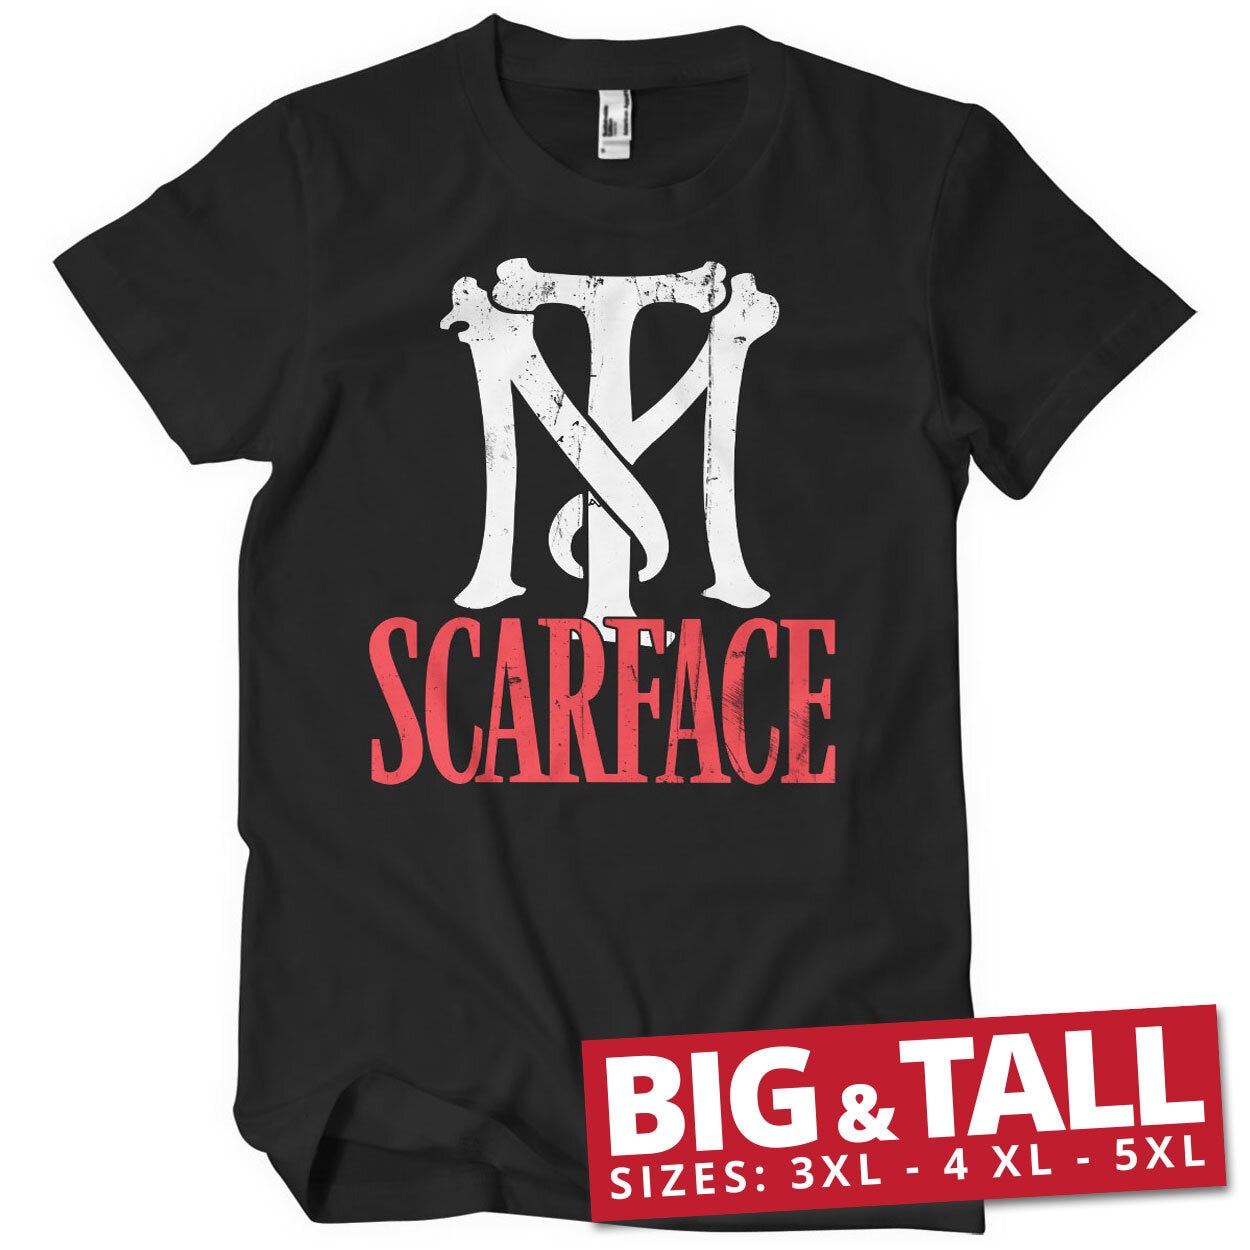 Scarface TM Logo Big & Tall T-Shirt